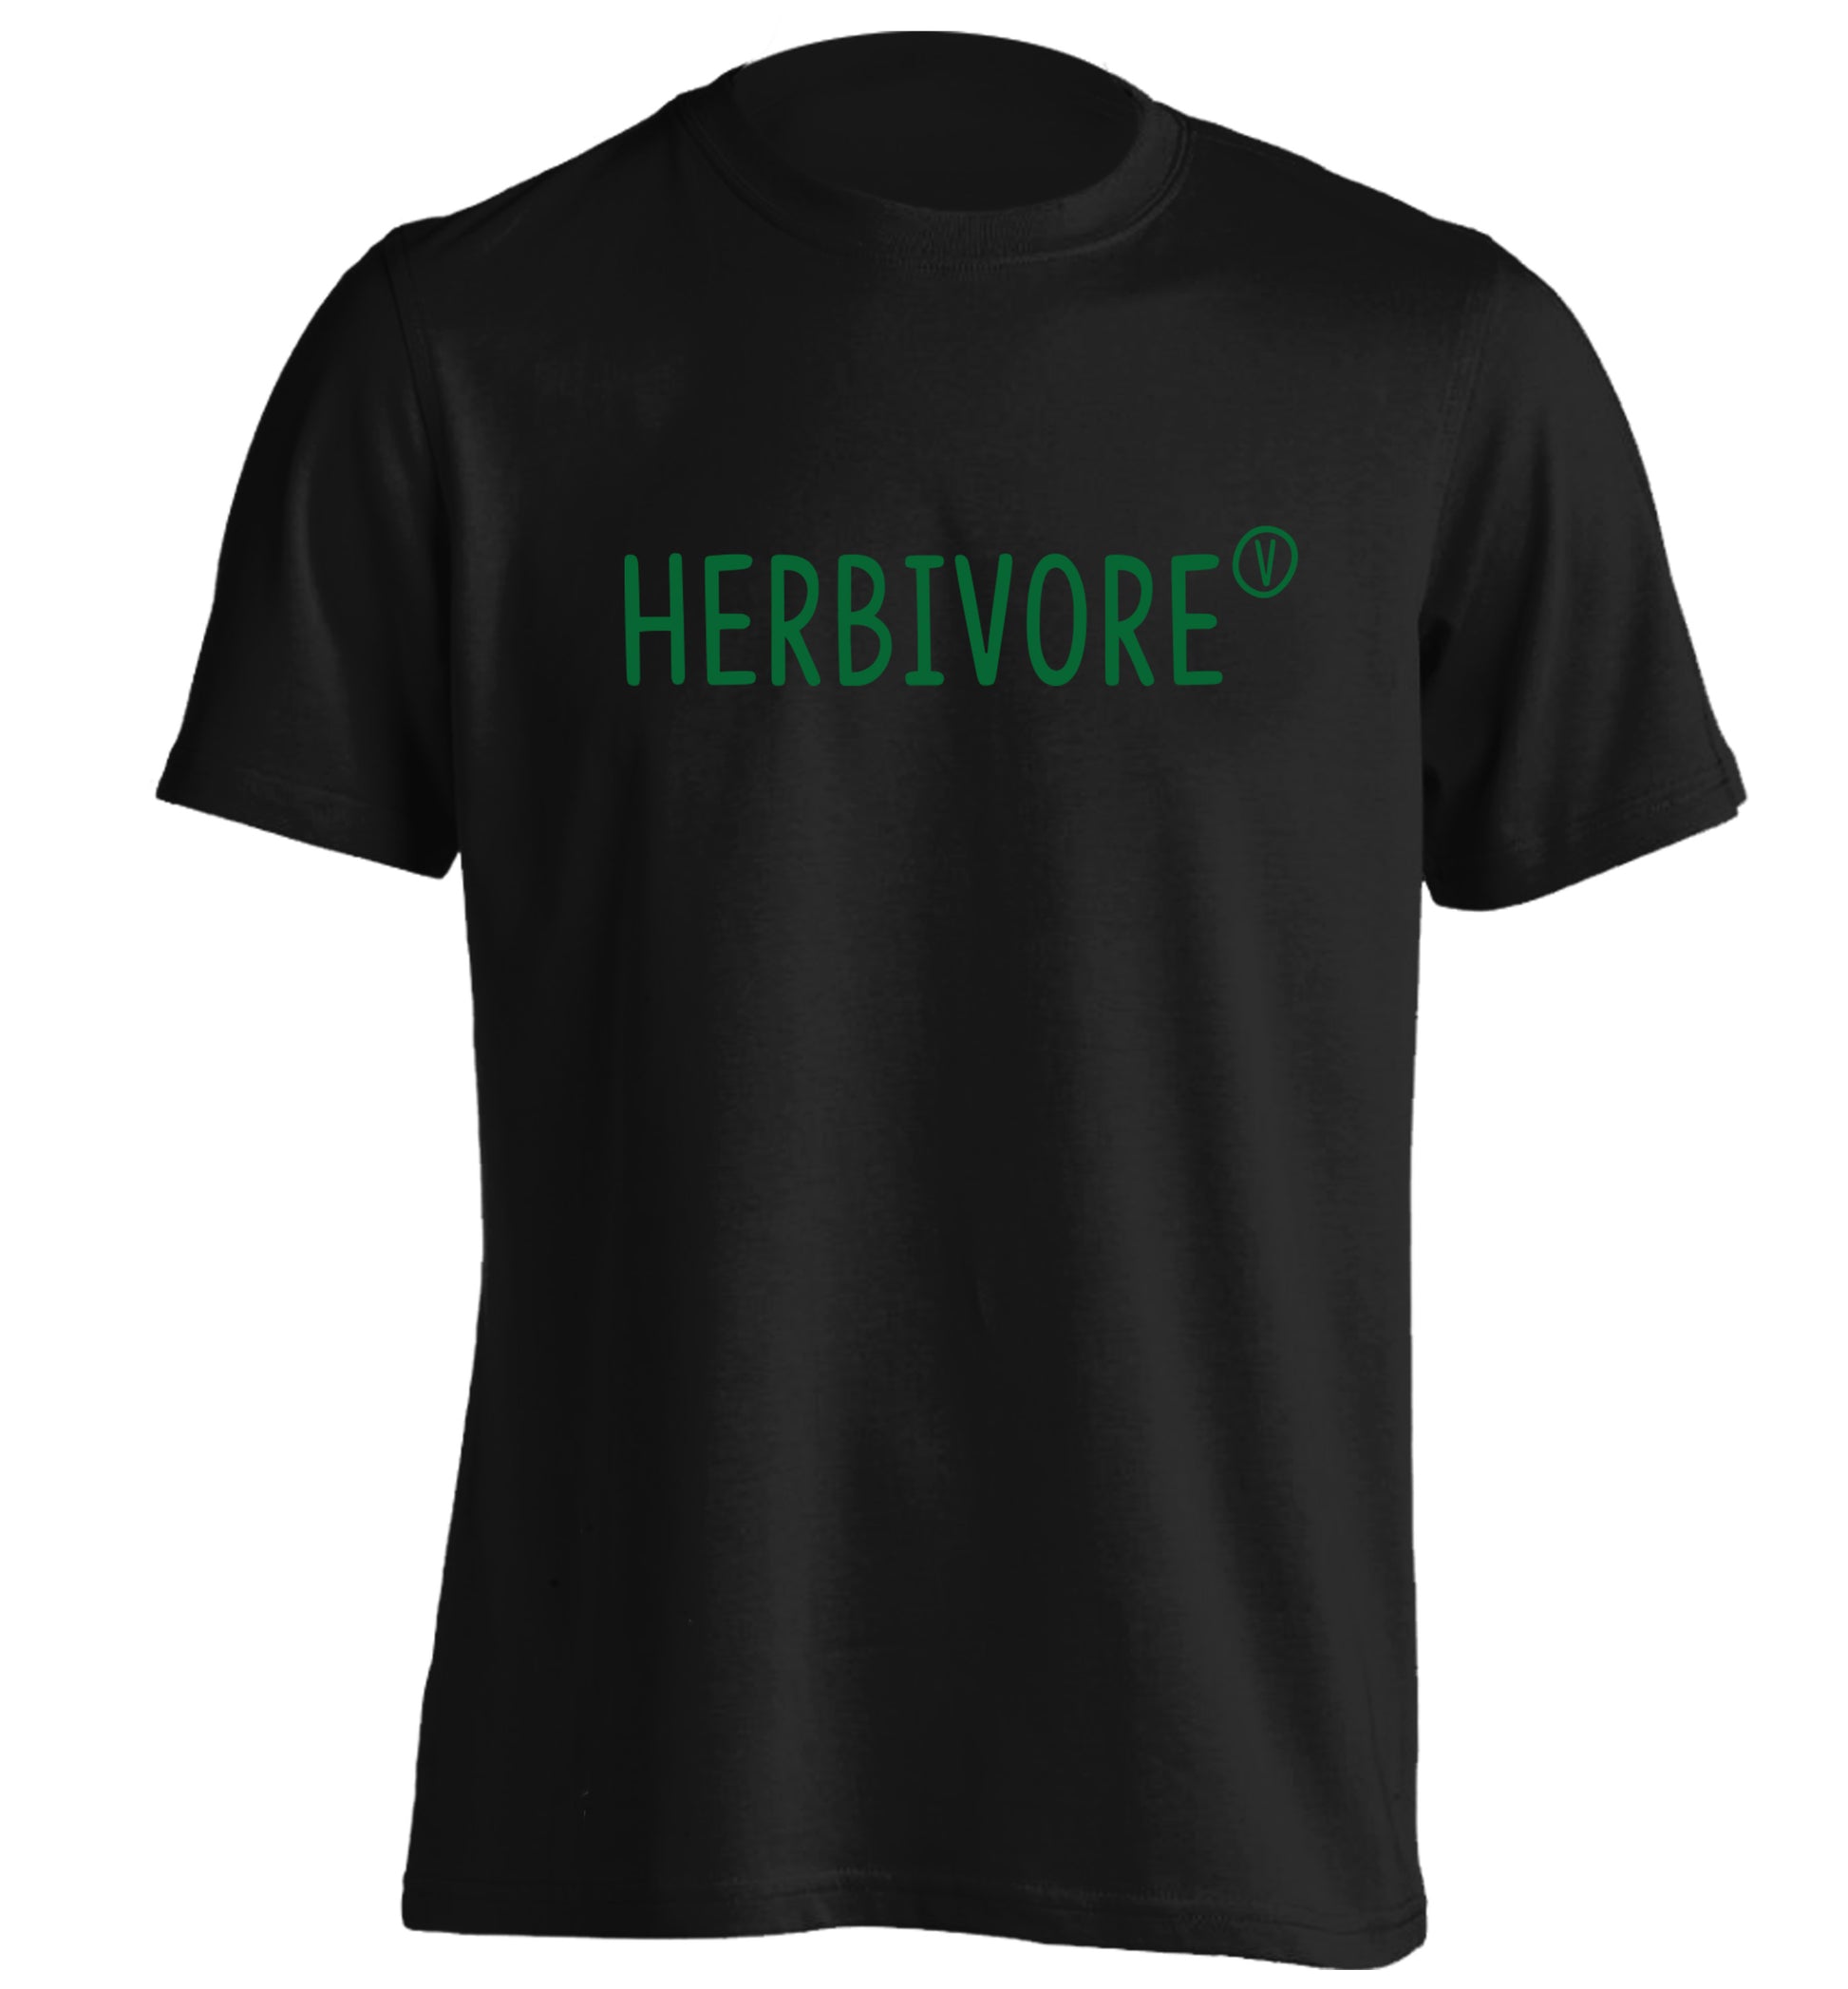 Herbivore adults unisex black Tshirt 2XL